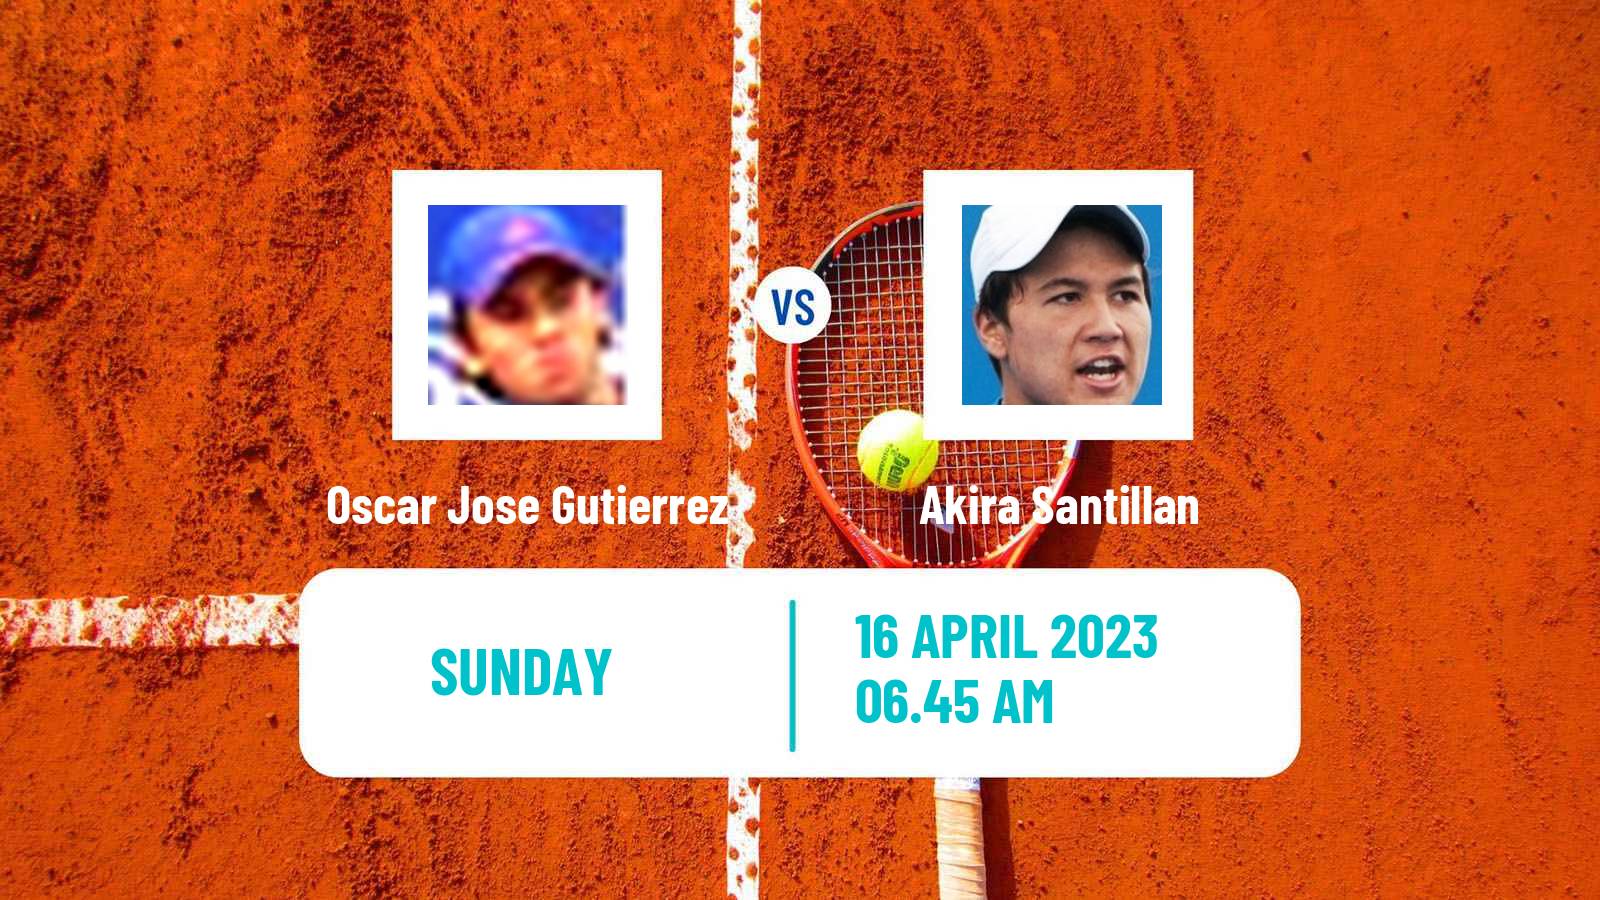 Tennis ATP Challenger Oscar Jose Gutierrez - Akira Santillan